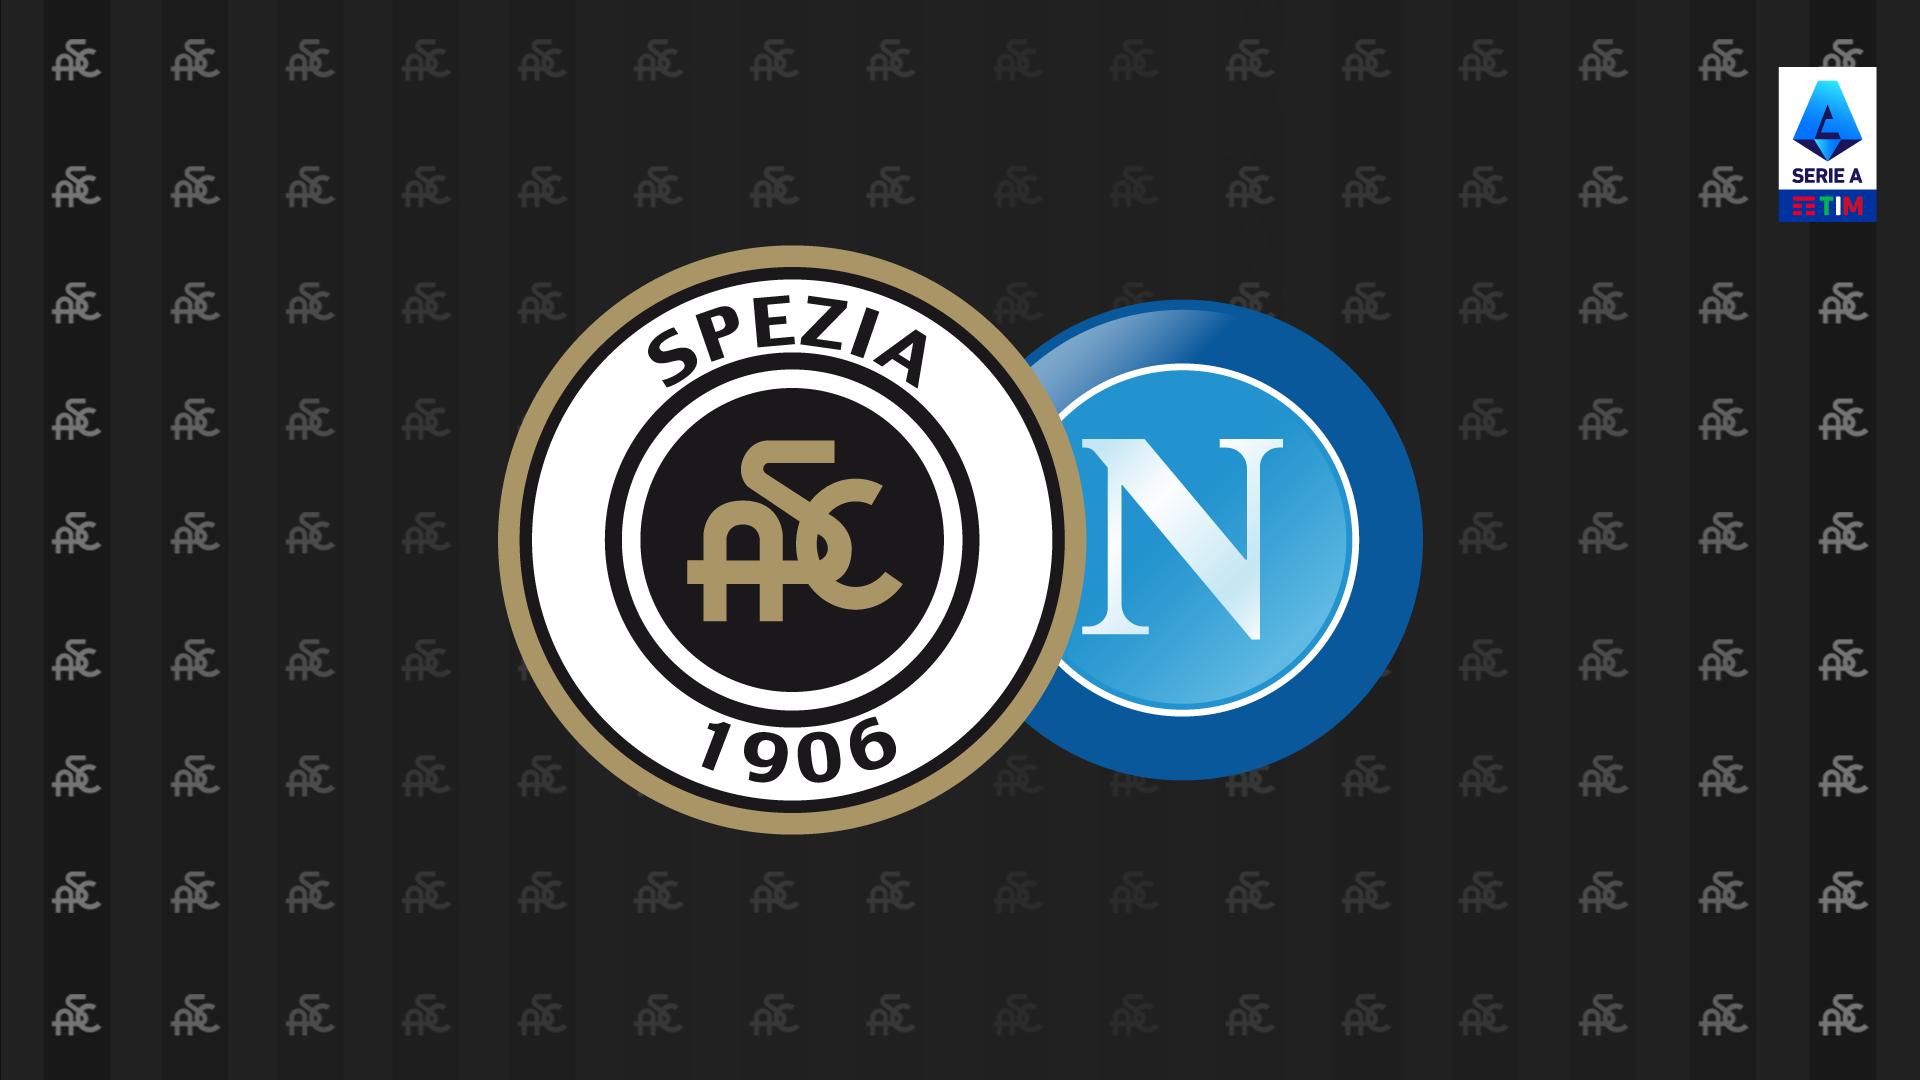 Spezia-Napoli: presale available from Thursday 12